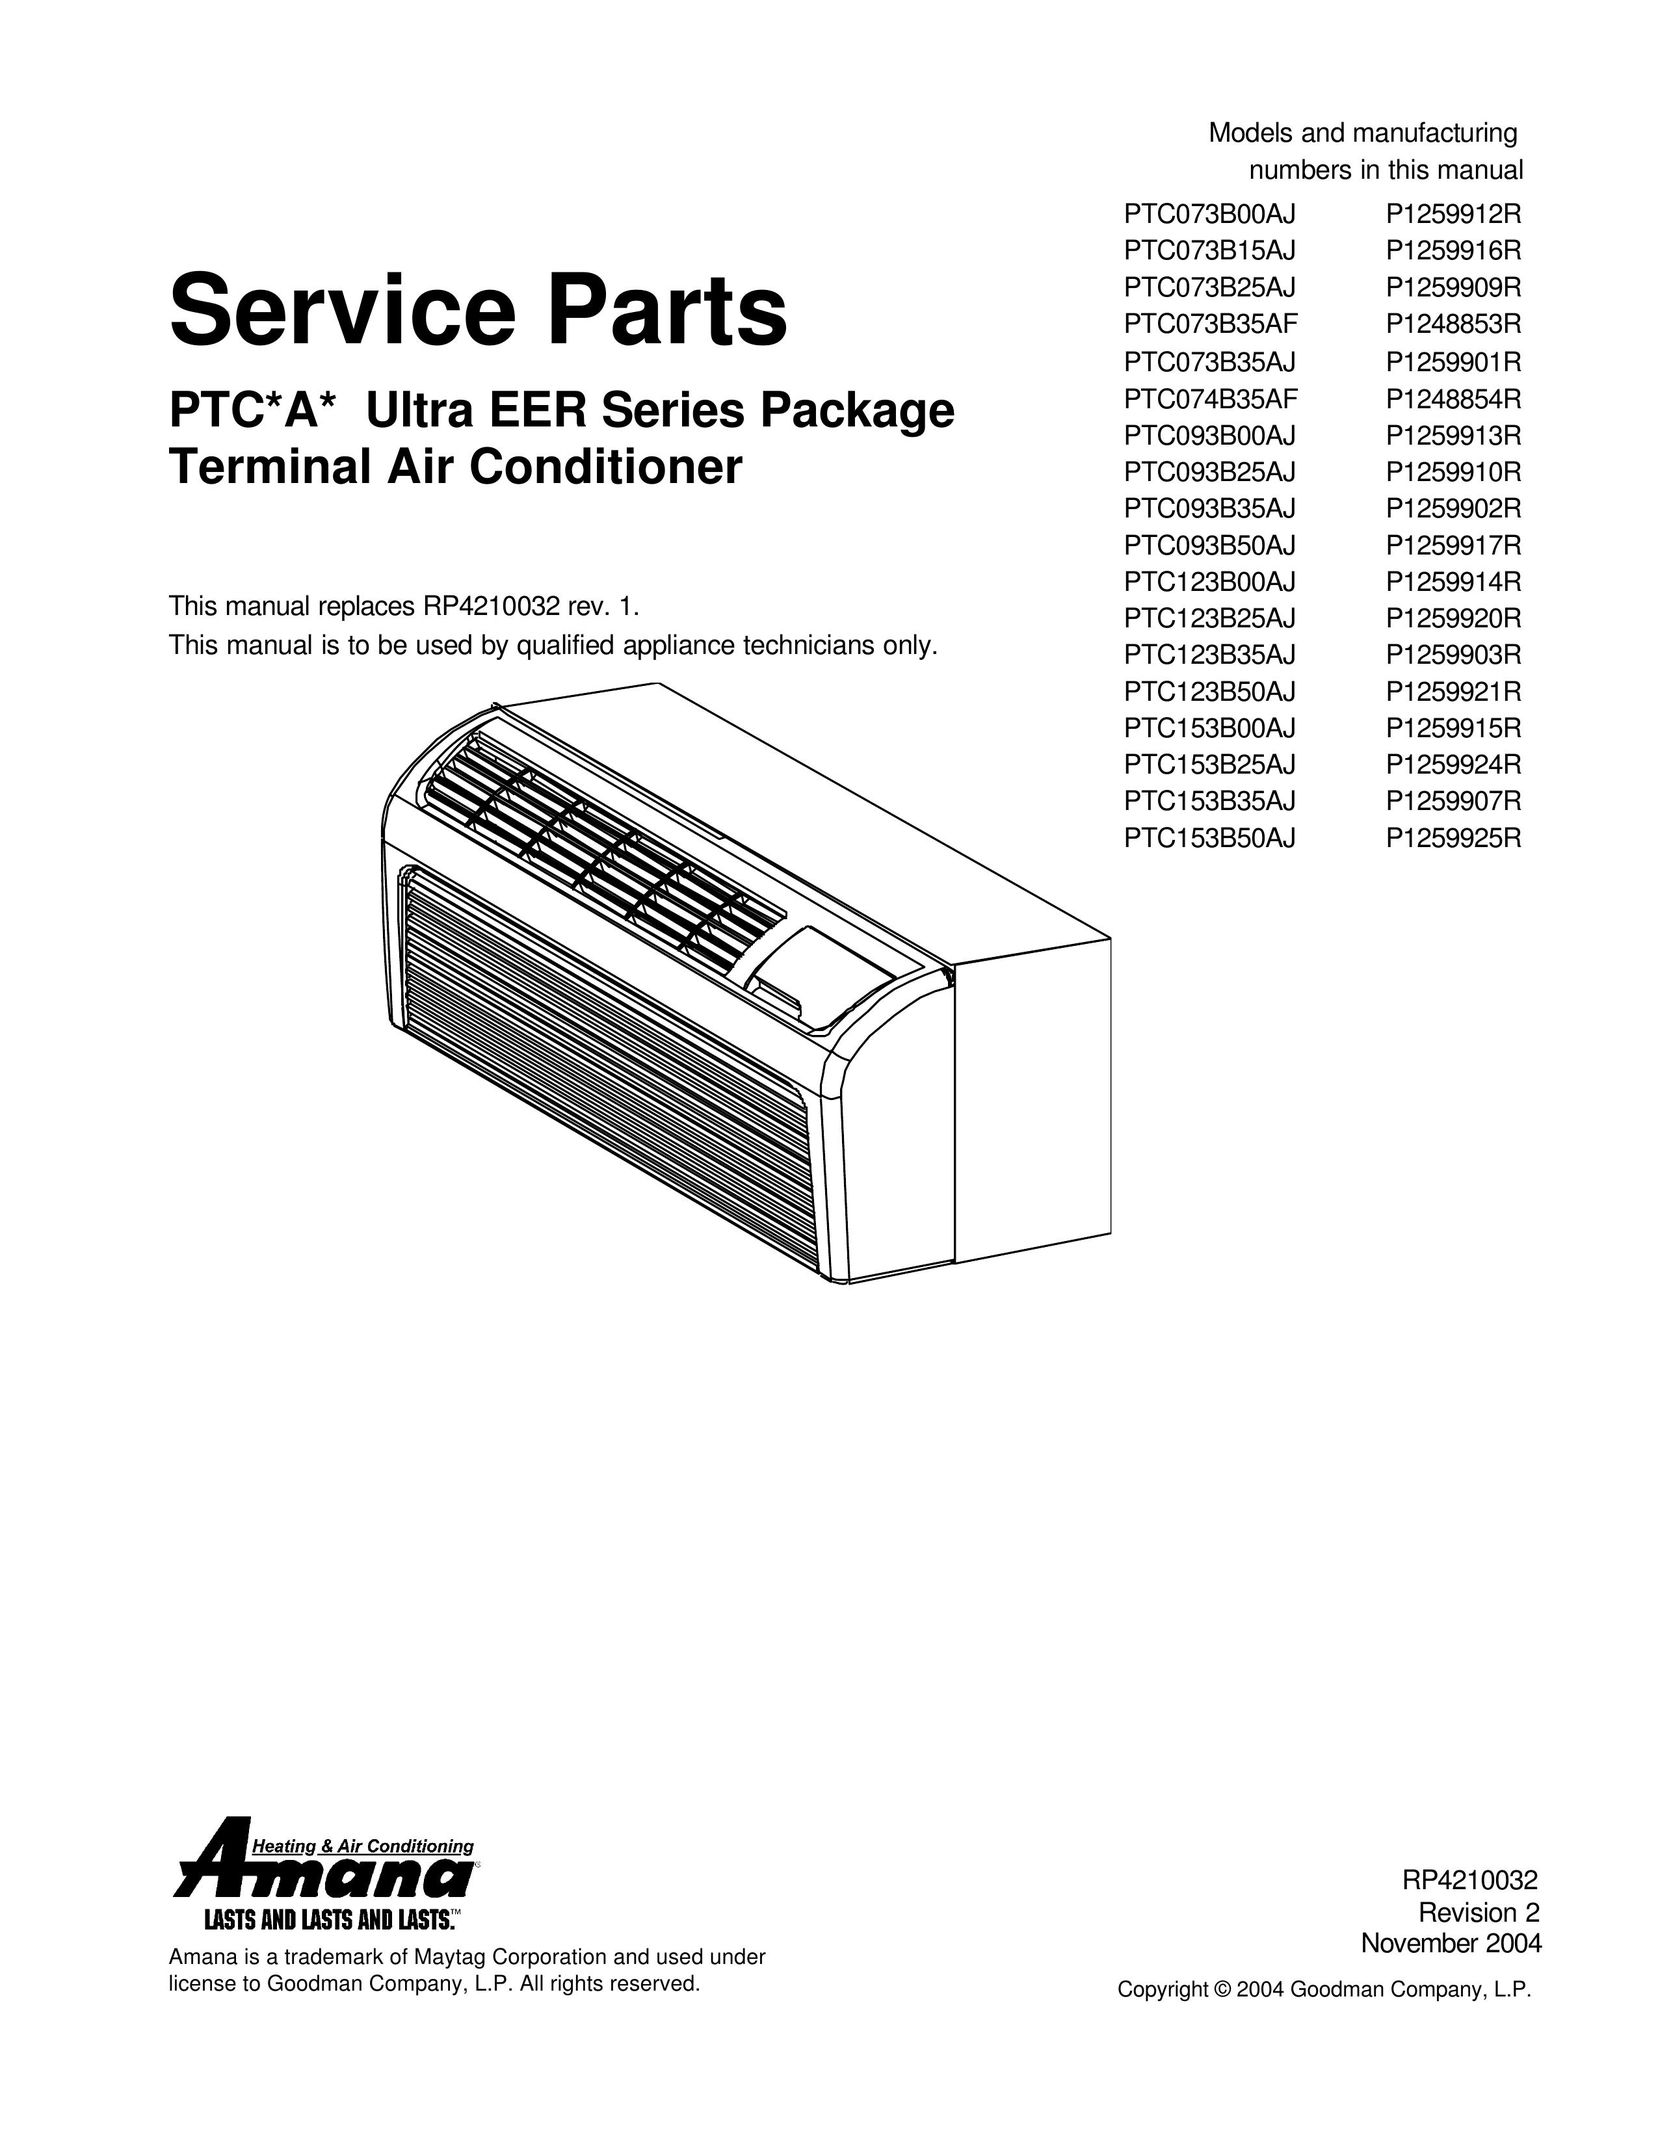 Amana RP4210032 Air Conditioner User Manual